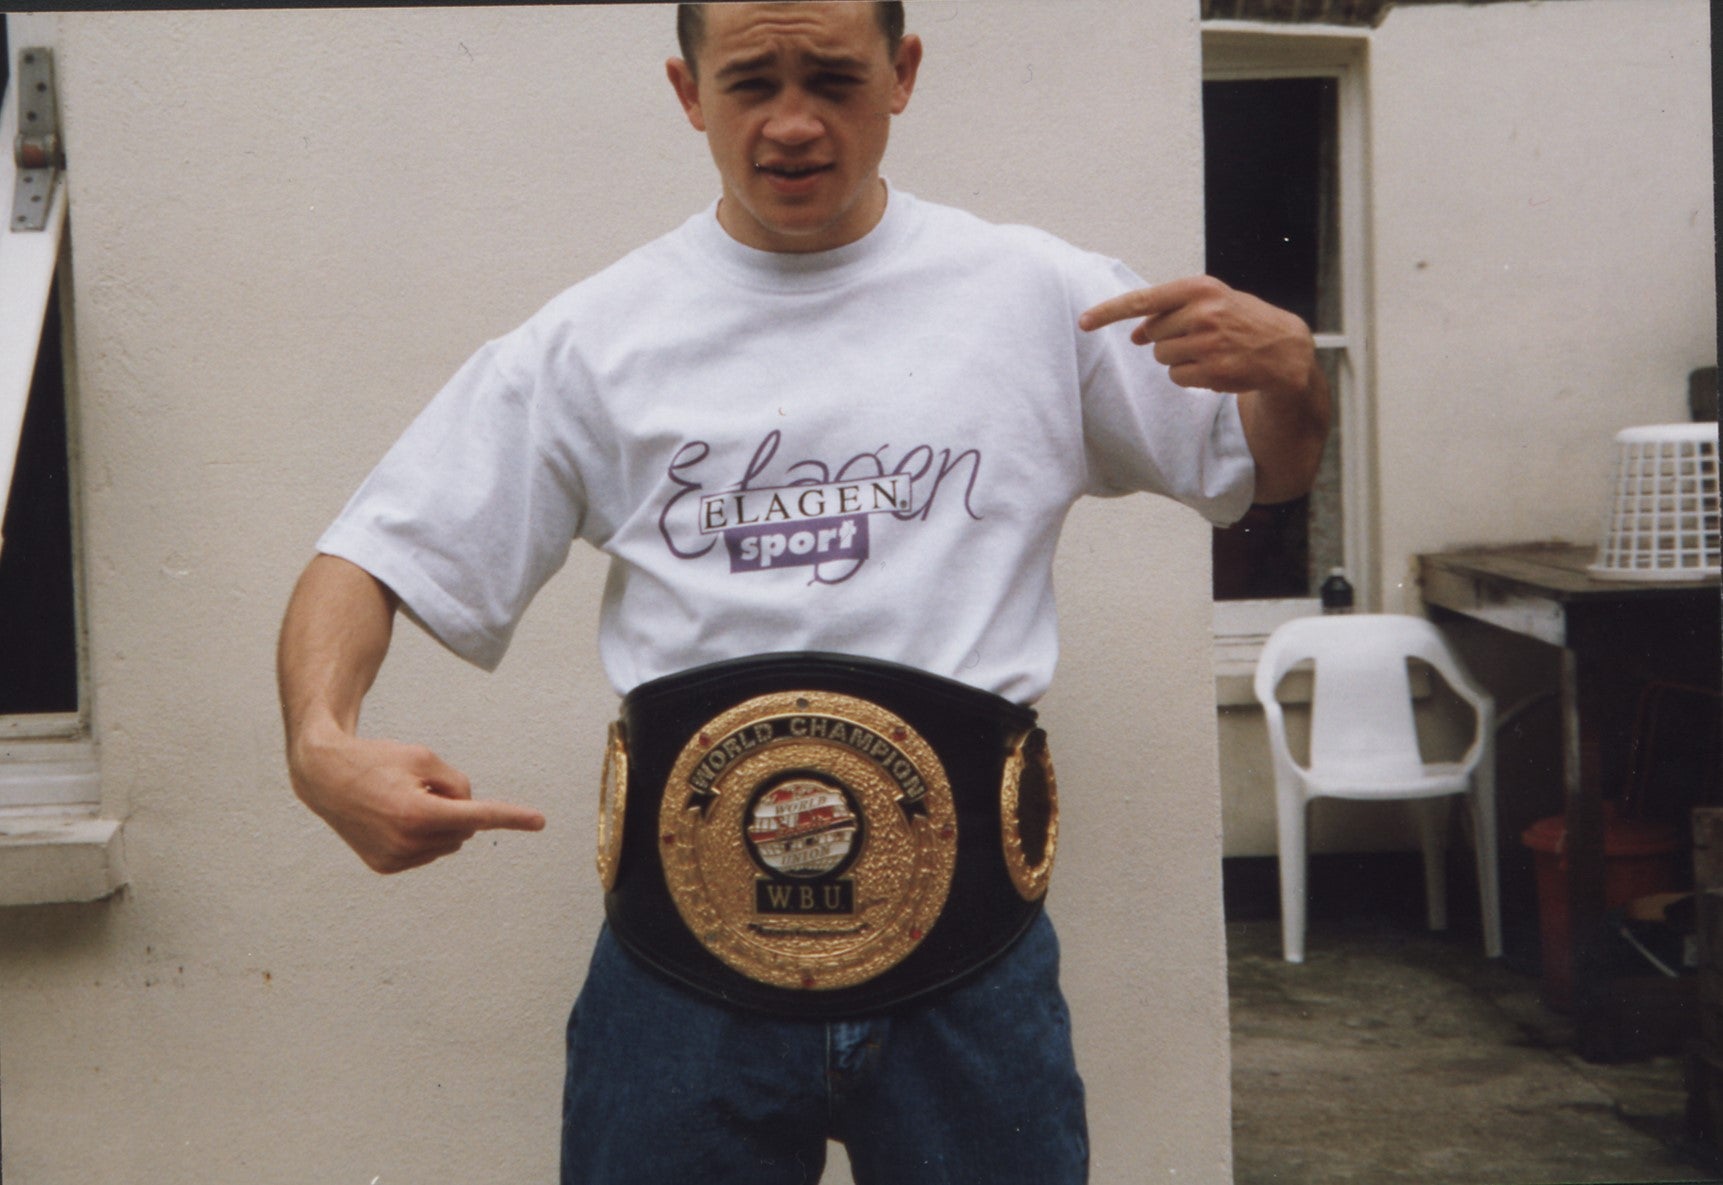 Previous Sponsored WBU World Champion Colin "The Dynamo" Dunne.